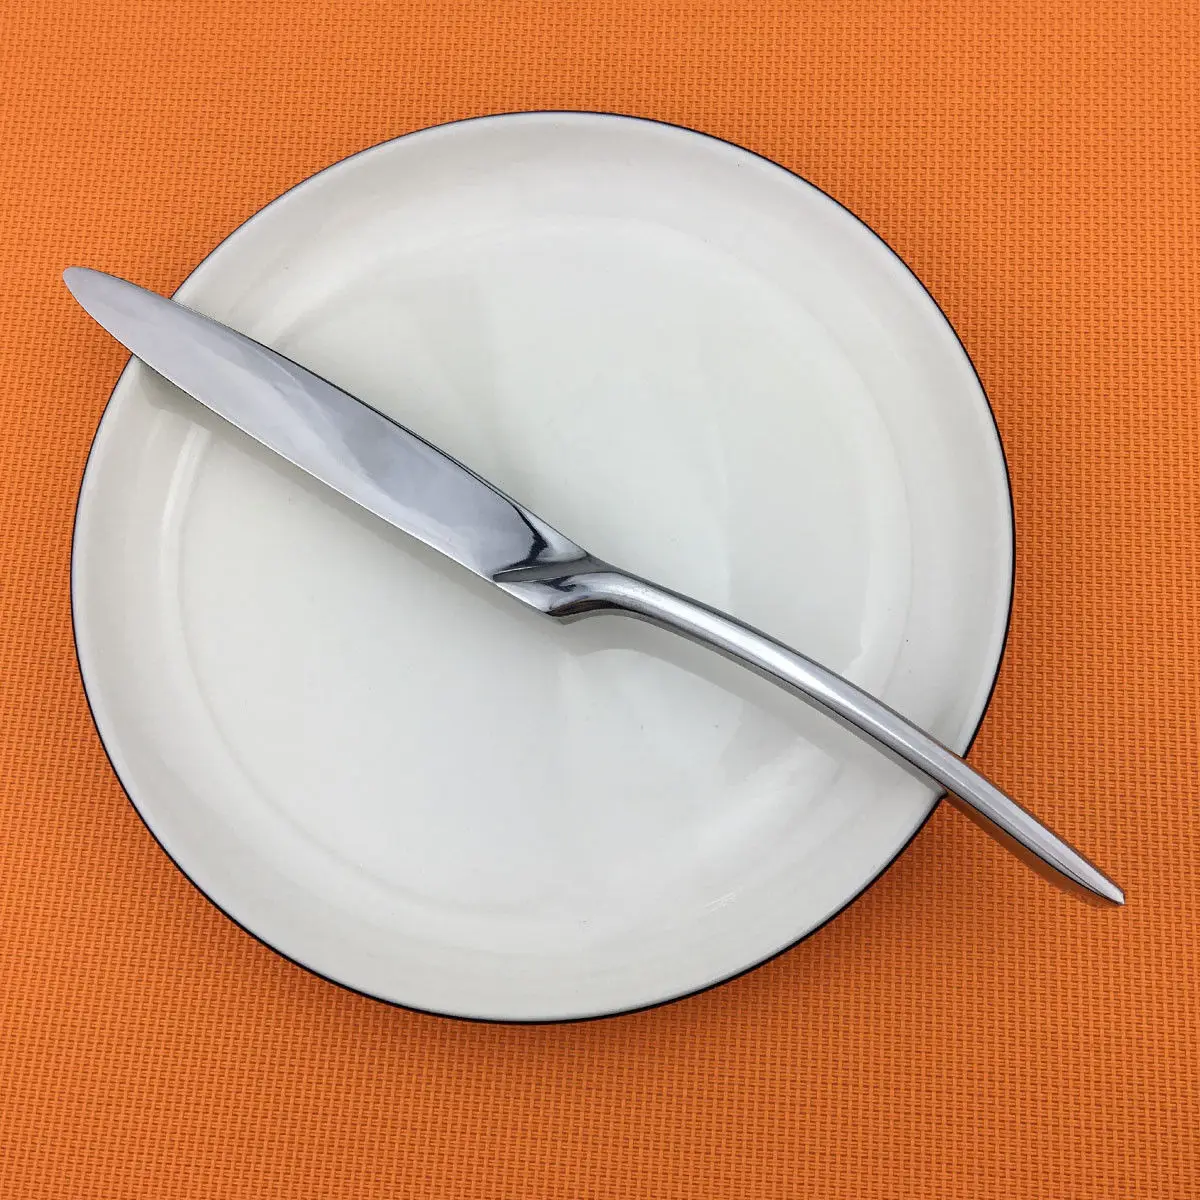 Sliver Shiny Mirror Dining Cutlery Set - Knife, Fork & Spoon Flatware